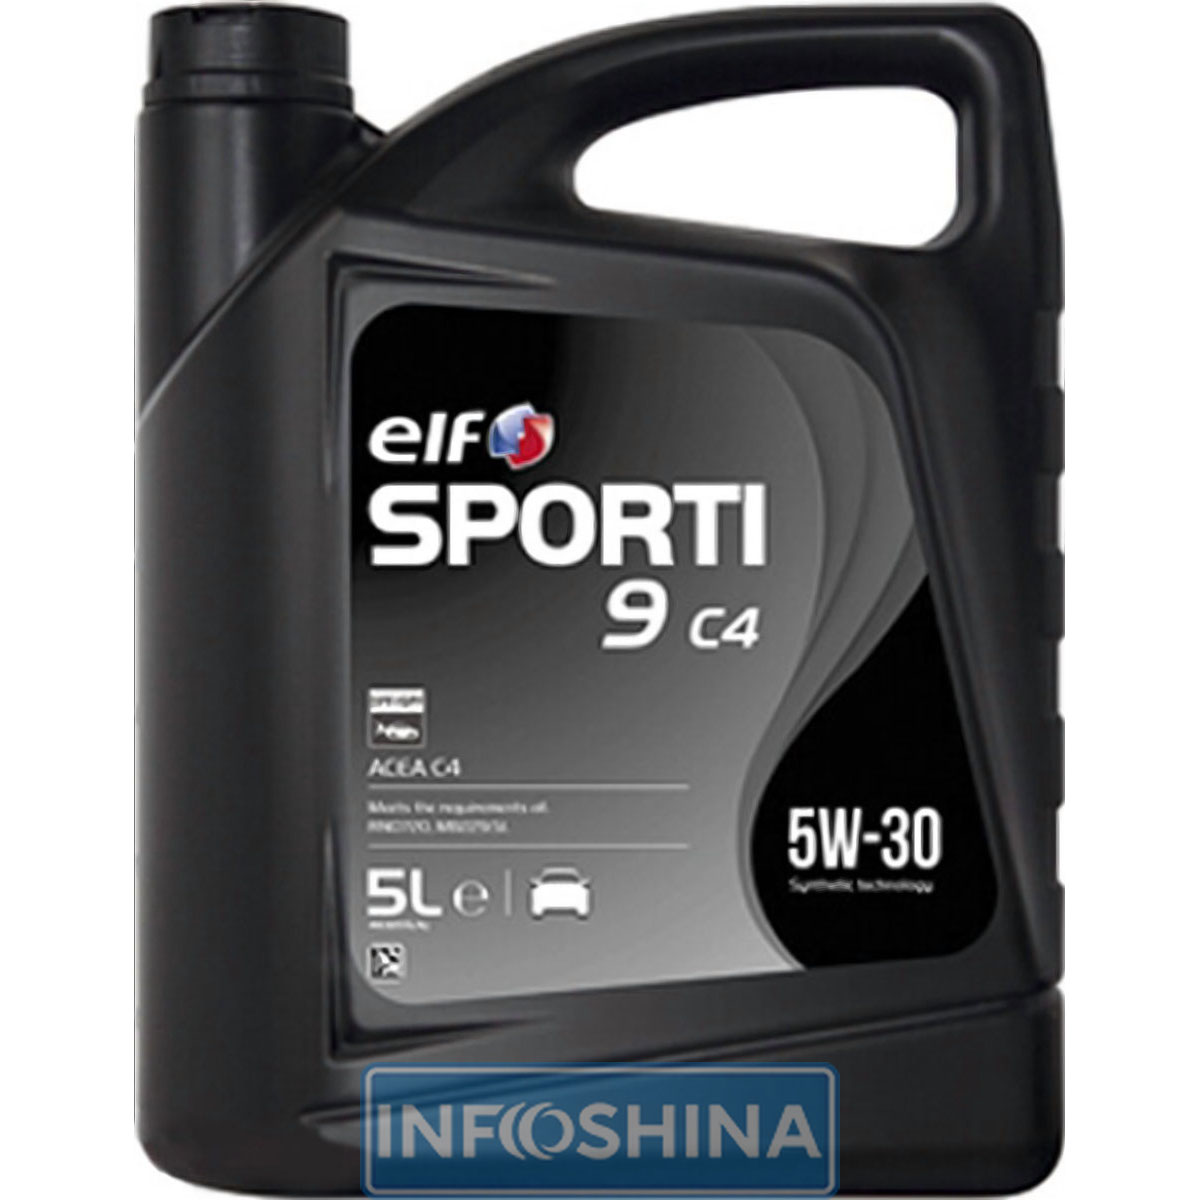 Купить масло ELF SPORTI 9 5W-30 C4 (5л)